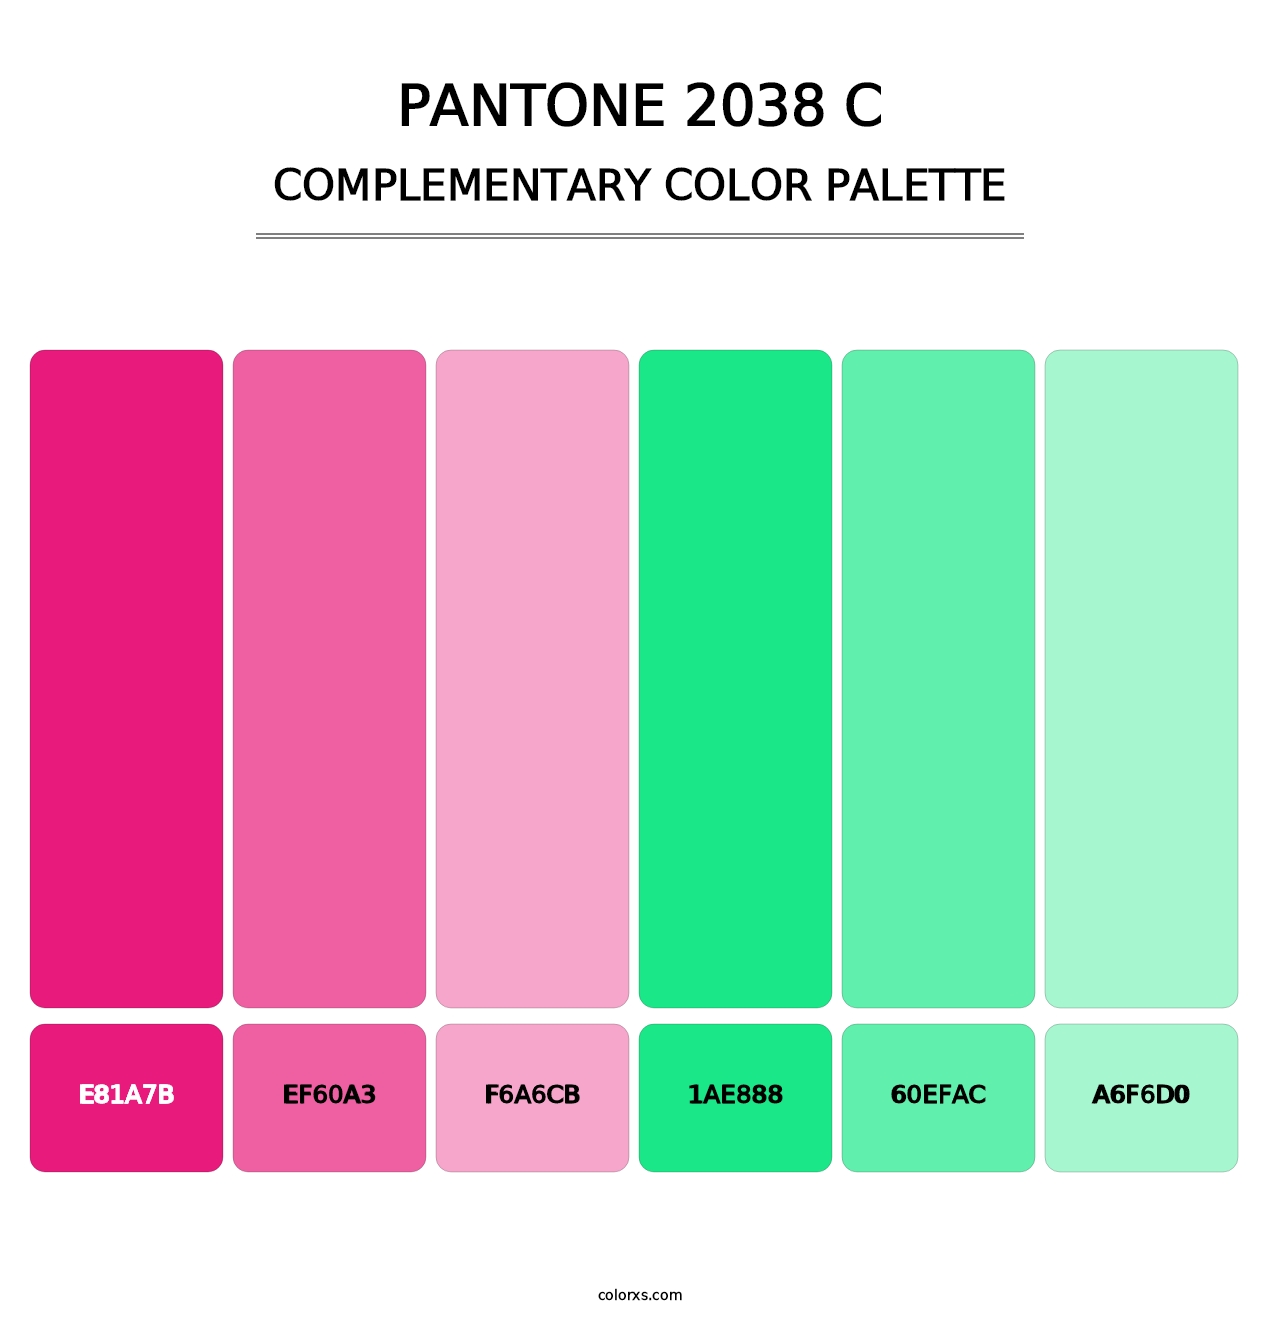 PANTONE 2038 C - Complementary Color Palette